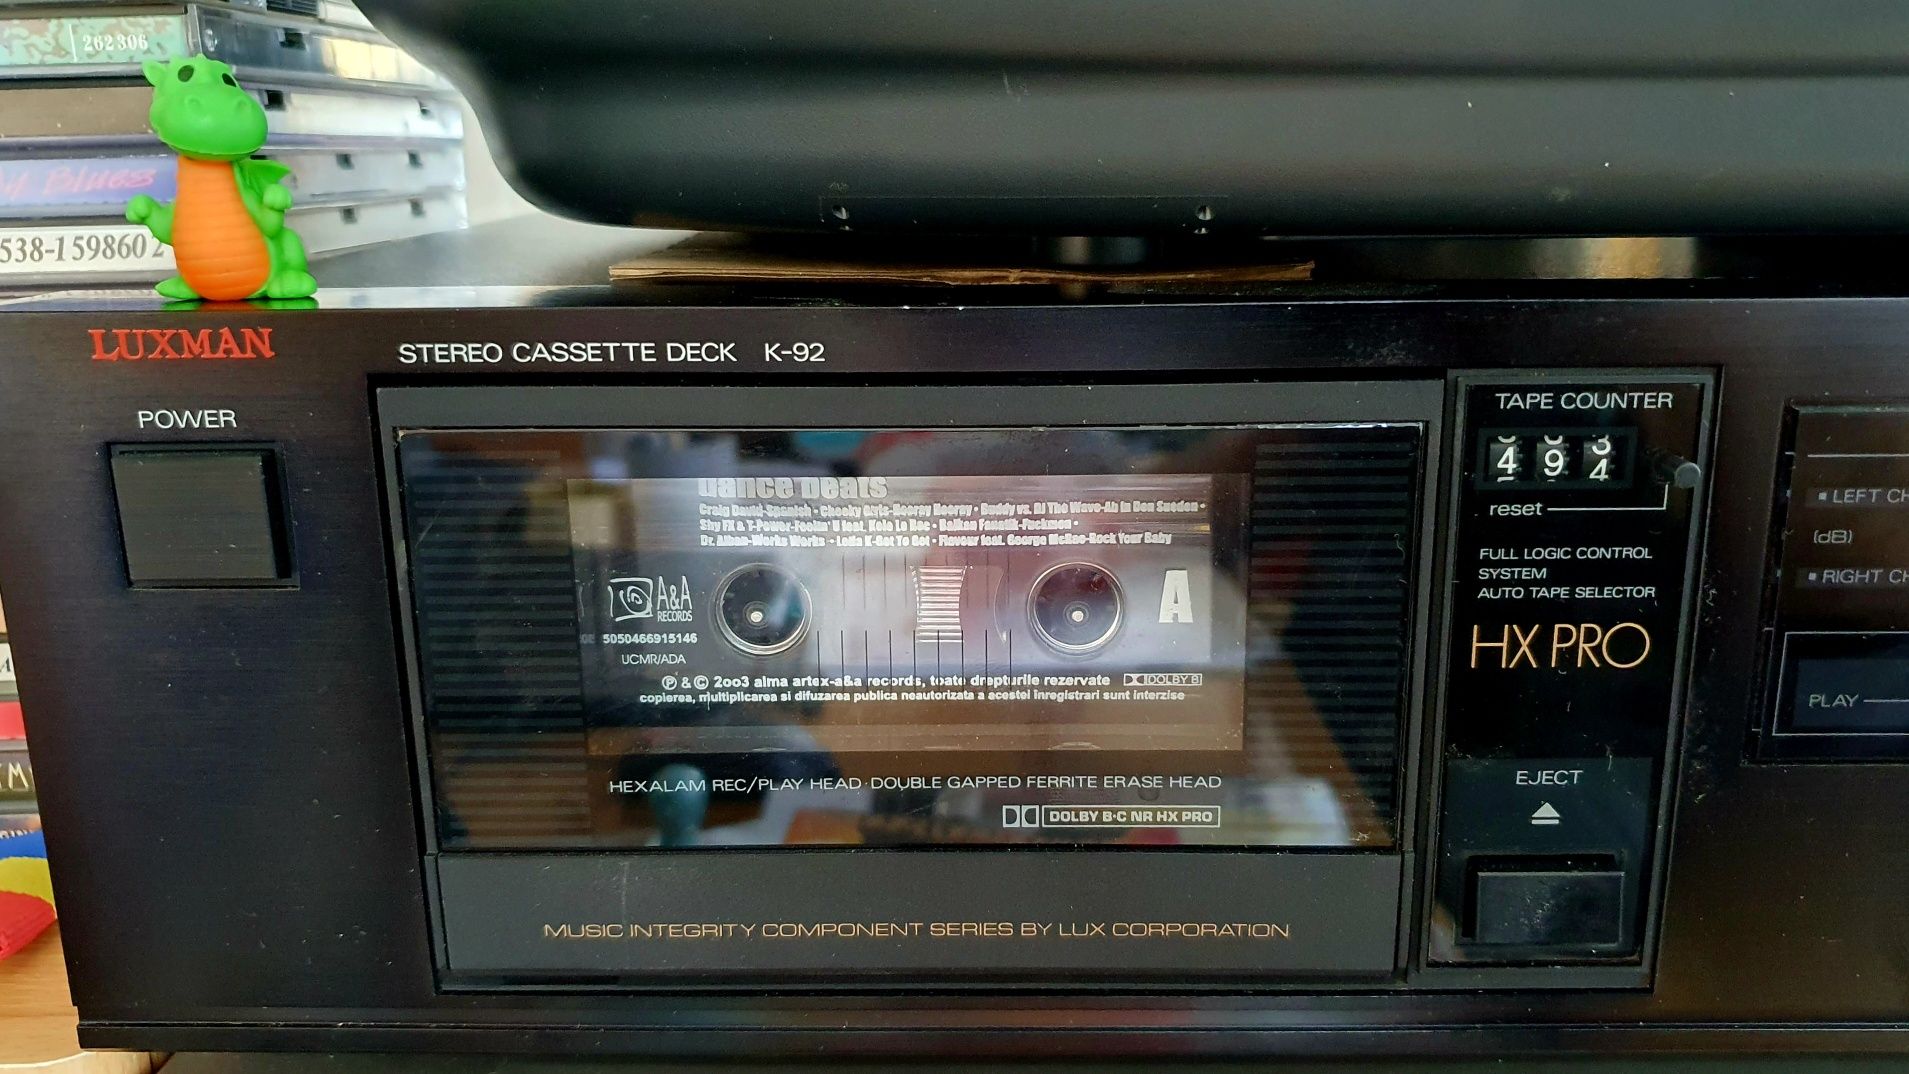 Luxman stereo cassette deck K-92